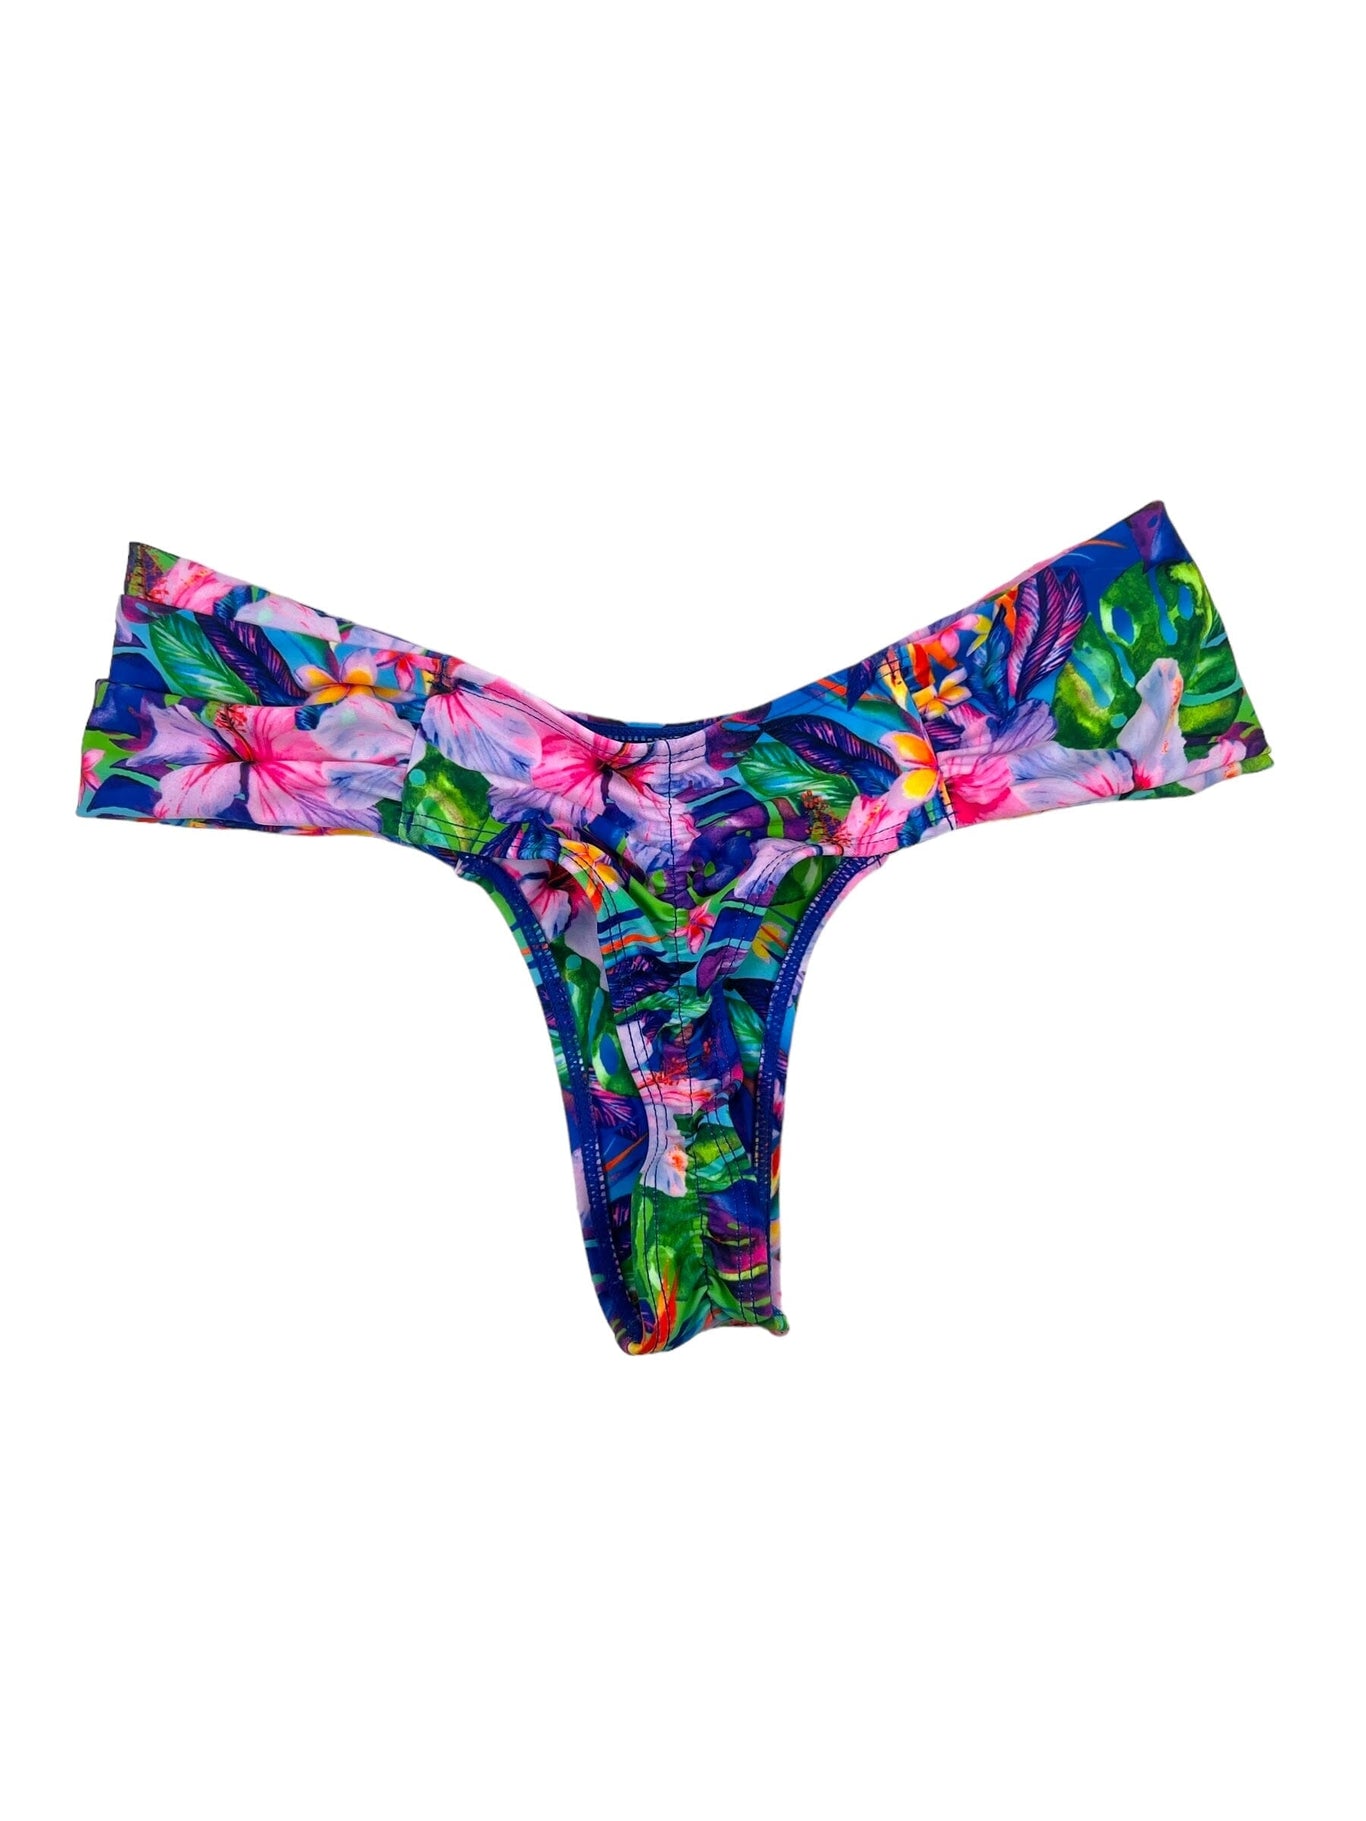 TROPICANA BLISS RUCHED BOTTOM - Berry Beachy Swimwear